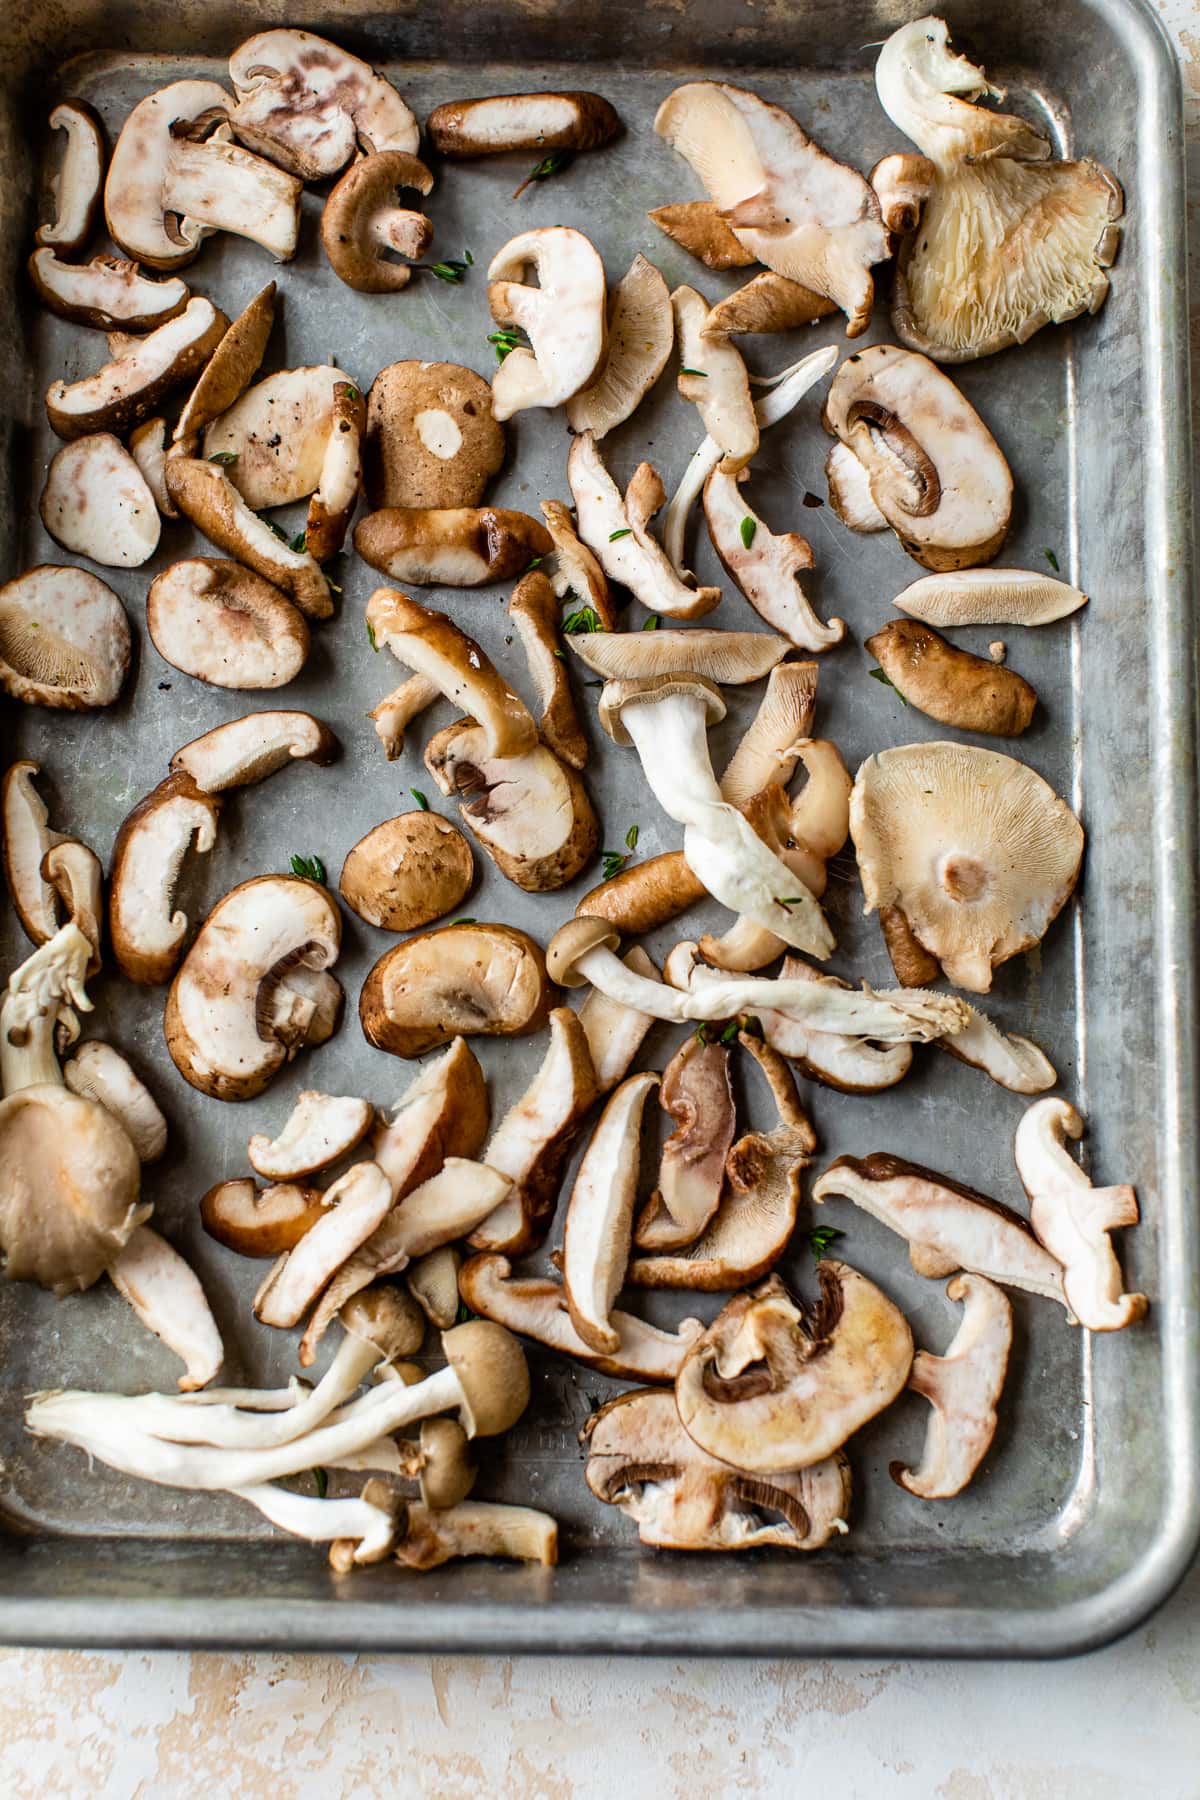 Mushrooms in a sheet pan